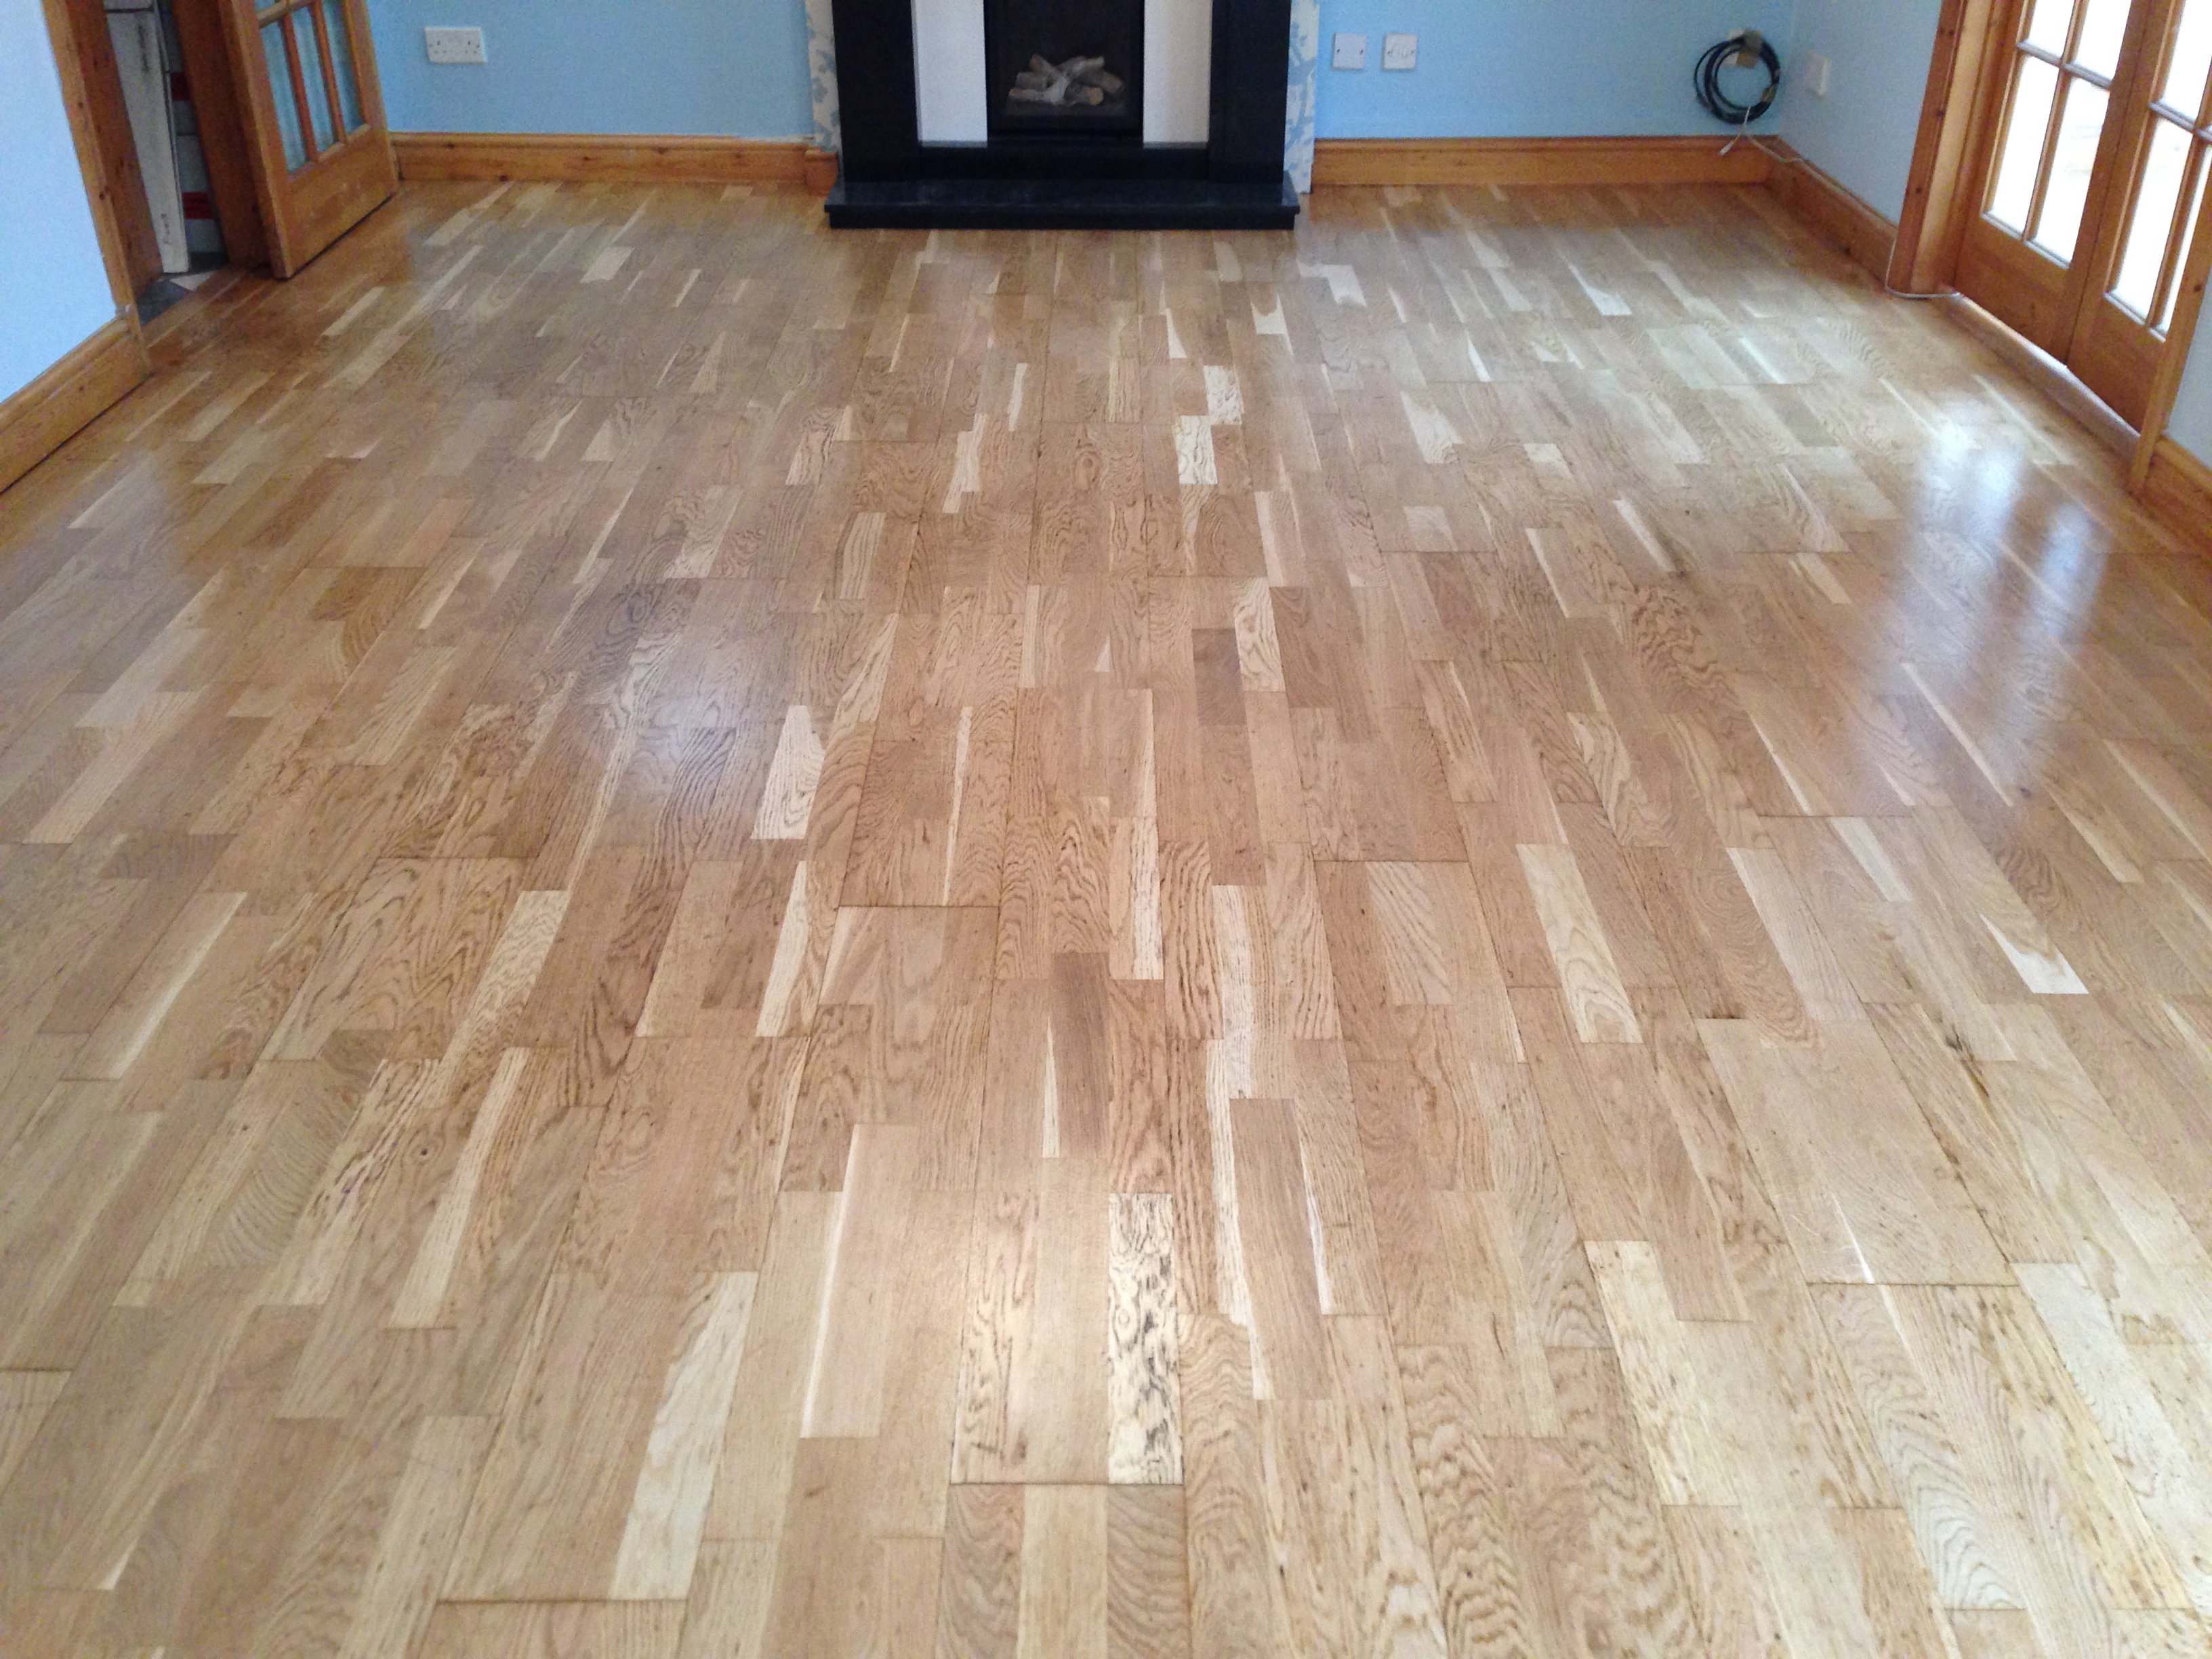 Laminate Wood Floor Restoration The, Redoing Laminate Flooring